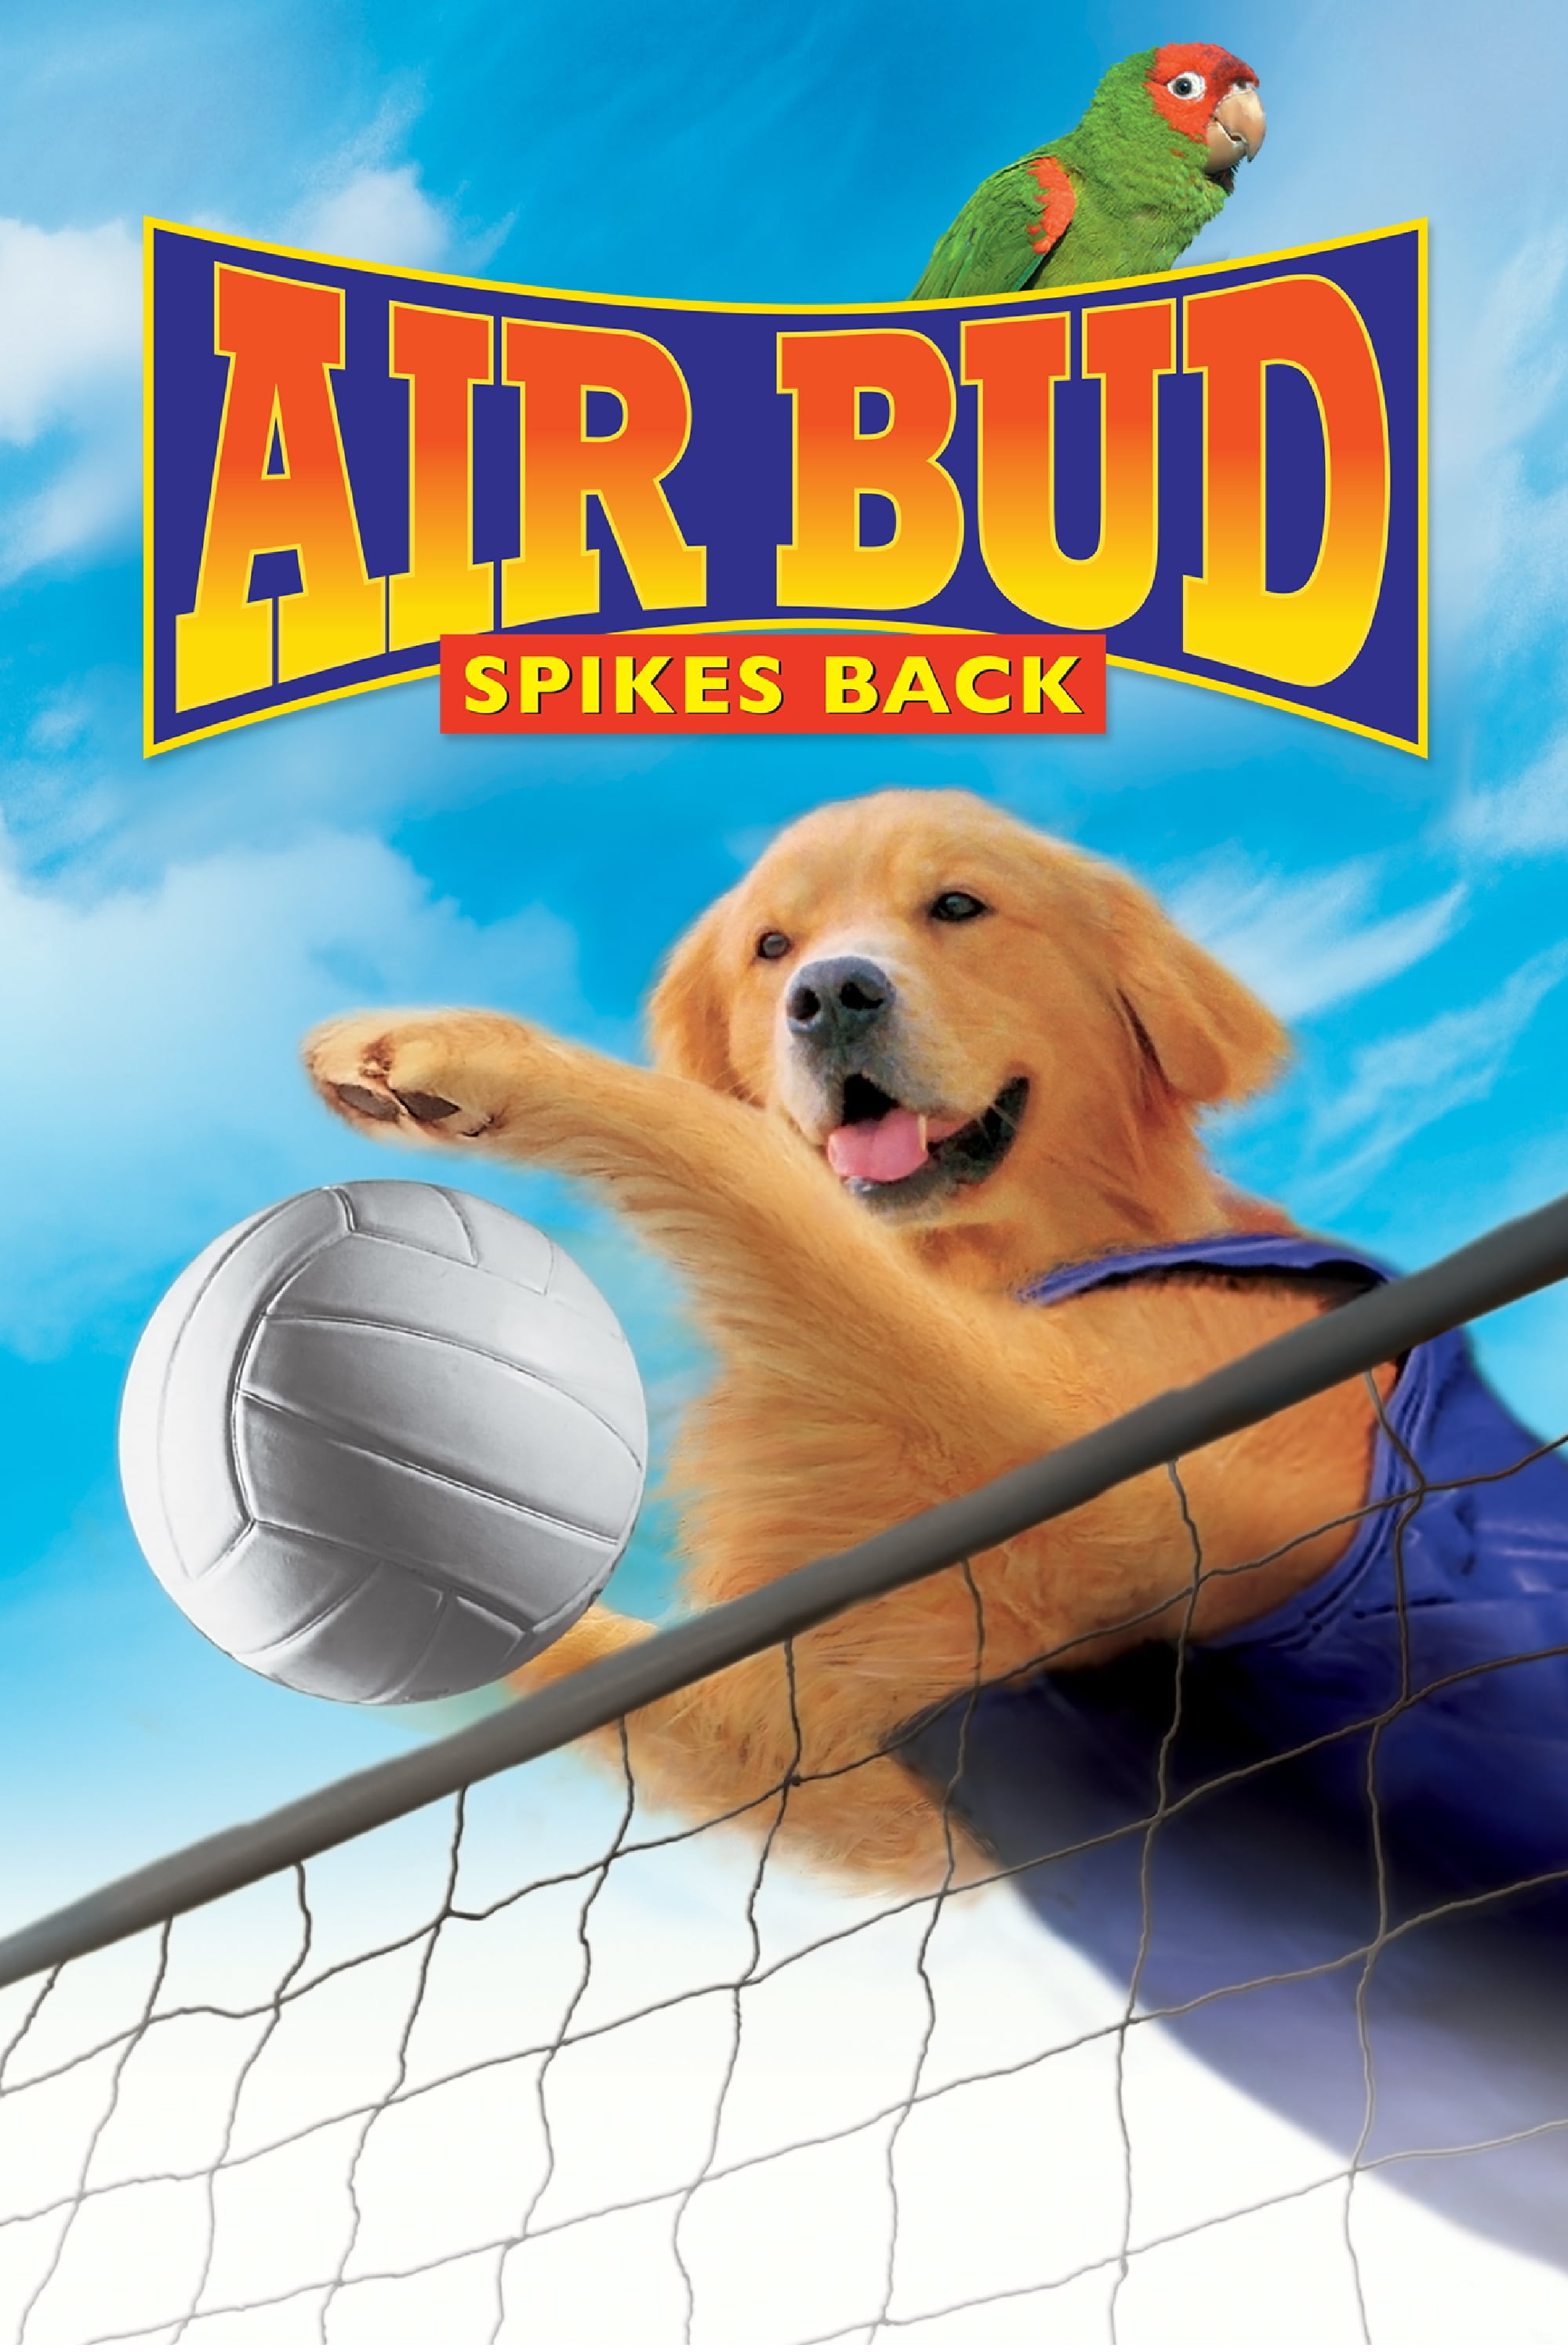 Caratula de Air Bud Spikes Back (Air Bud 5: Golpea de nuevo) 